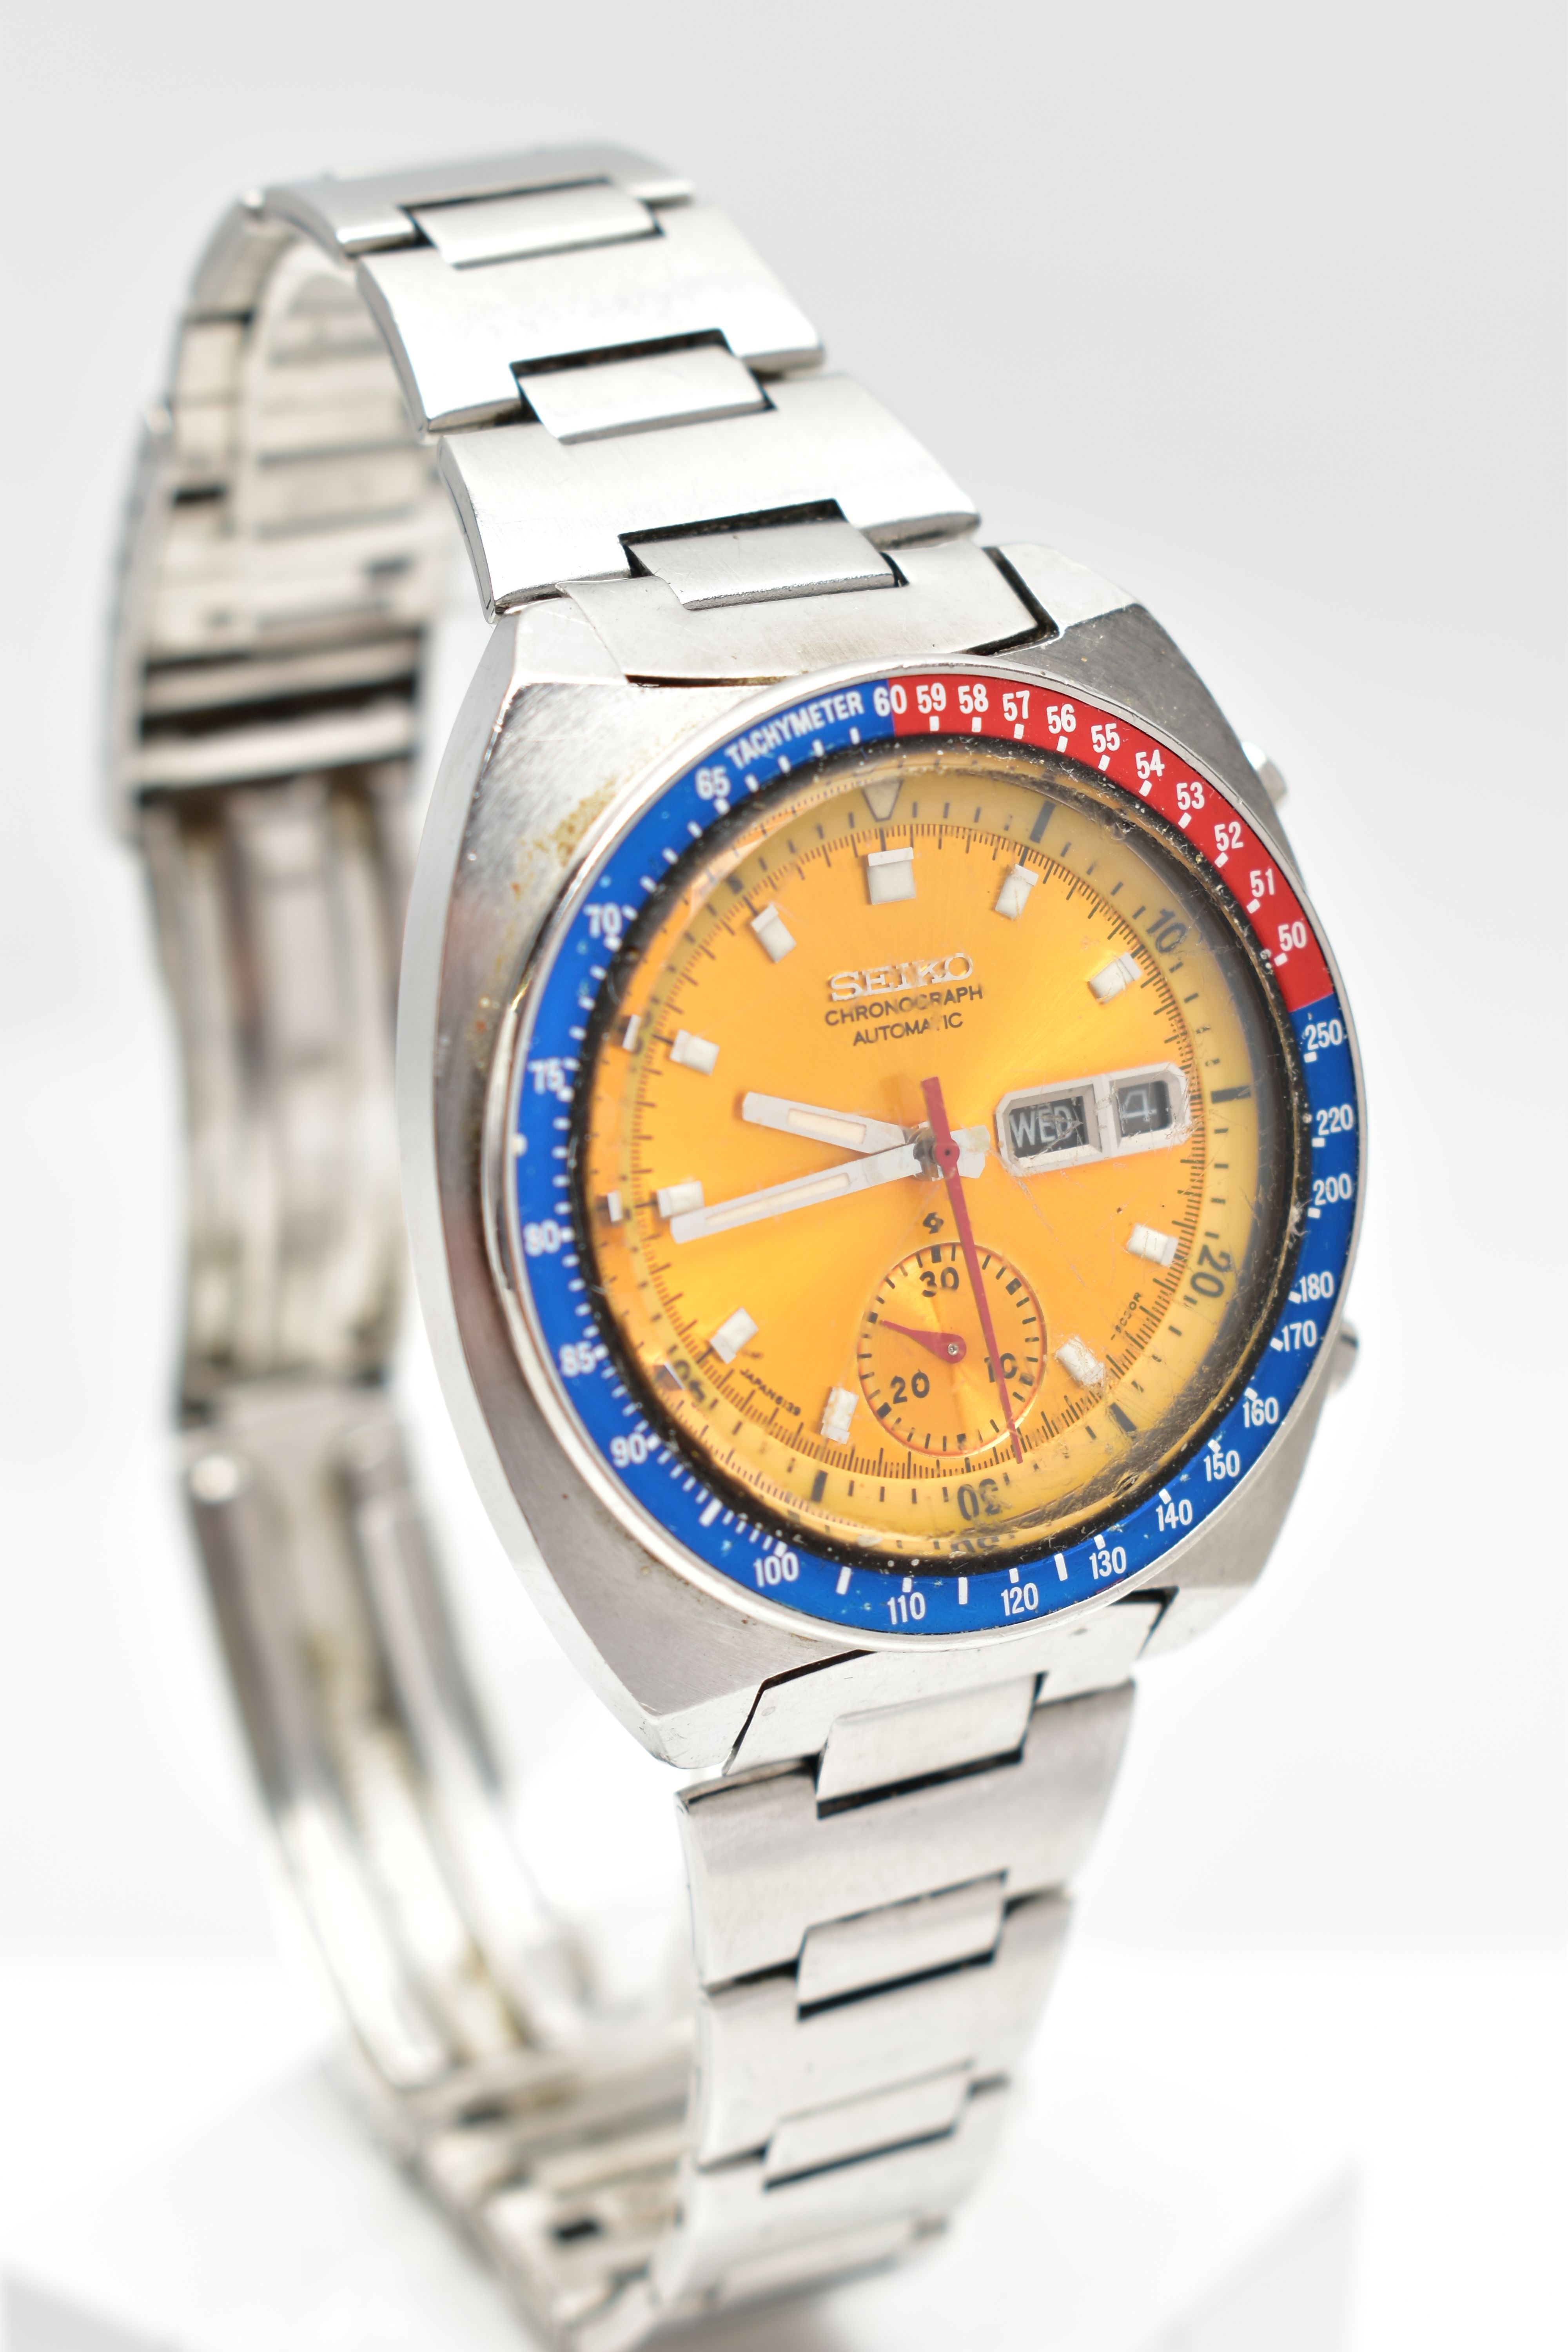 A 'SEIKO' WRISTWATCH, automatic movement, round yellow dial, signed 'Seiko chronograph automatic', - Image 2 of 6